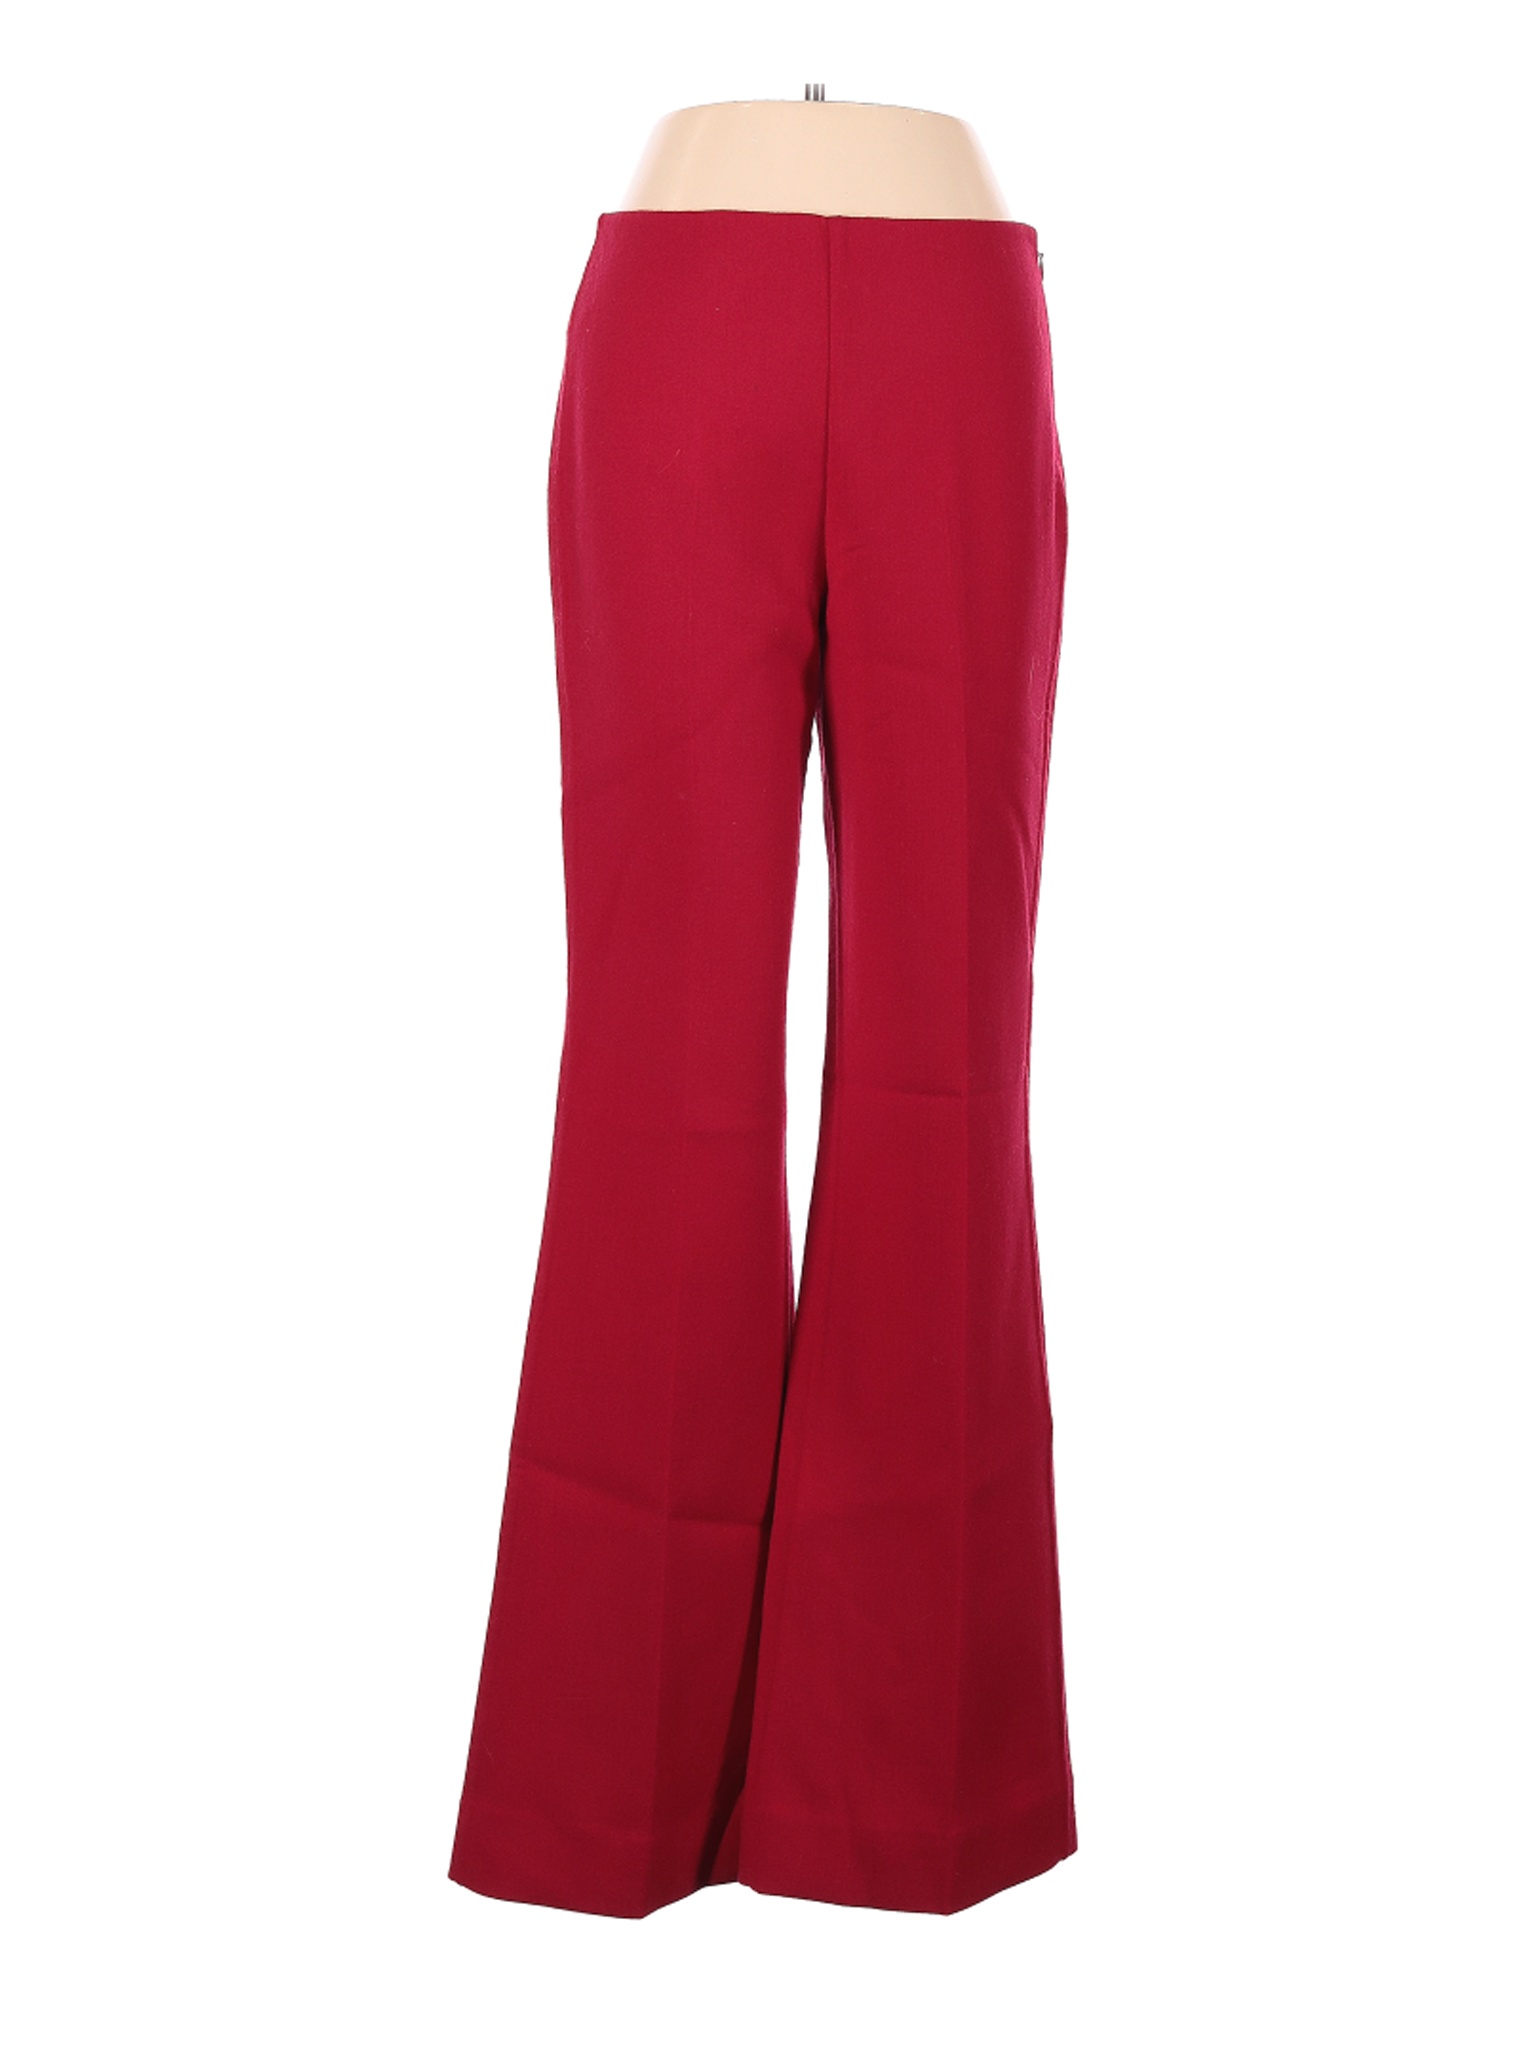 Theory Women Red Wool Pants 4 | eBay